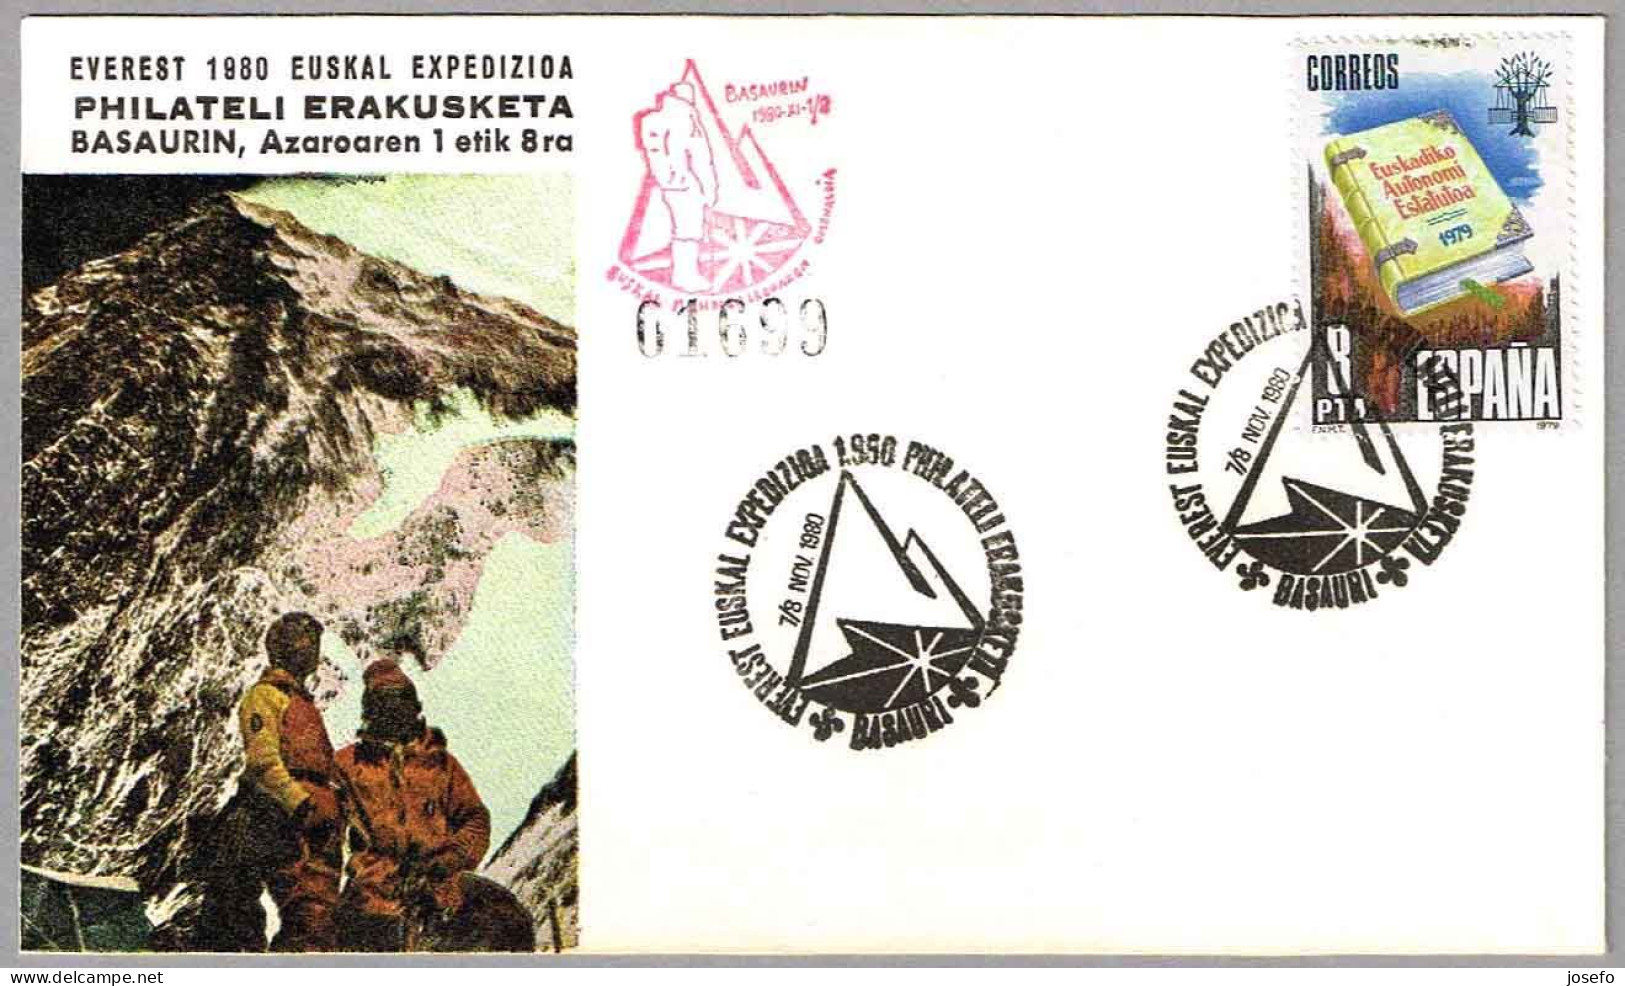 EXPEDICION VASCA AL EVEREST - Montañismo - Mountaineering. Basauri, Pais Vasco, 1980 - Escalada